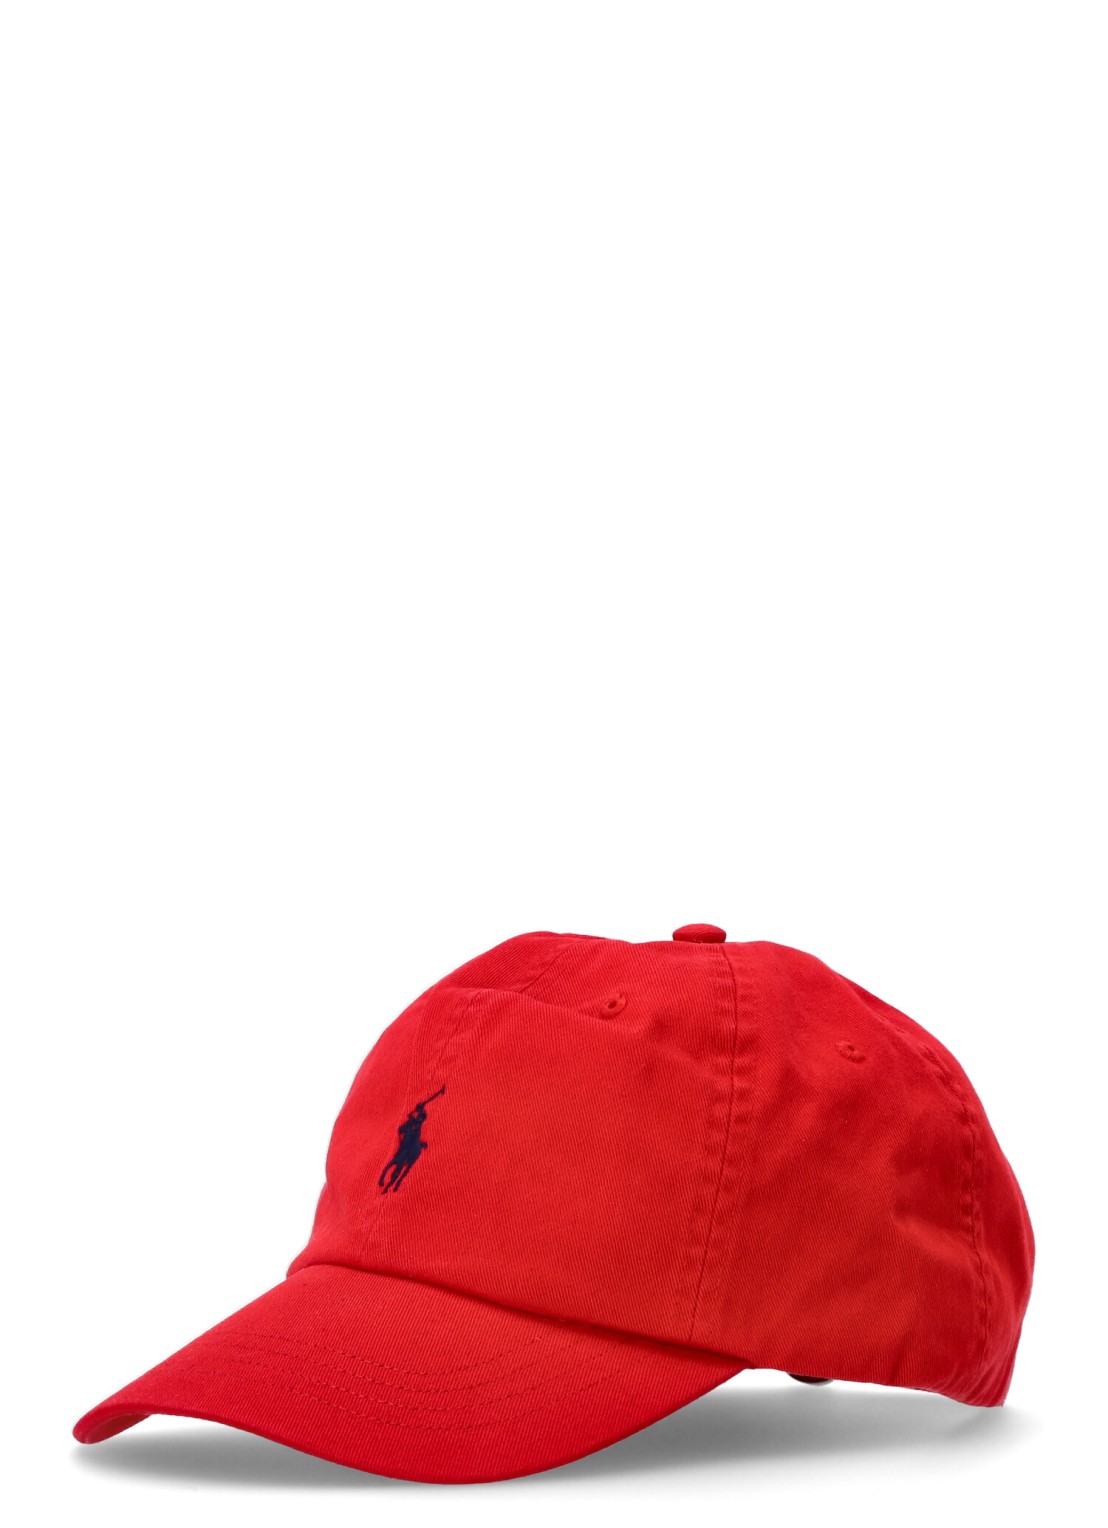 Gorras polo ralph lauren cap man sport cap hat 710548524002 rl2000 red blue talla rojo
 